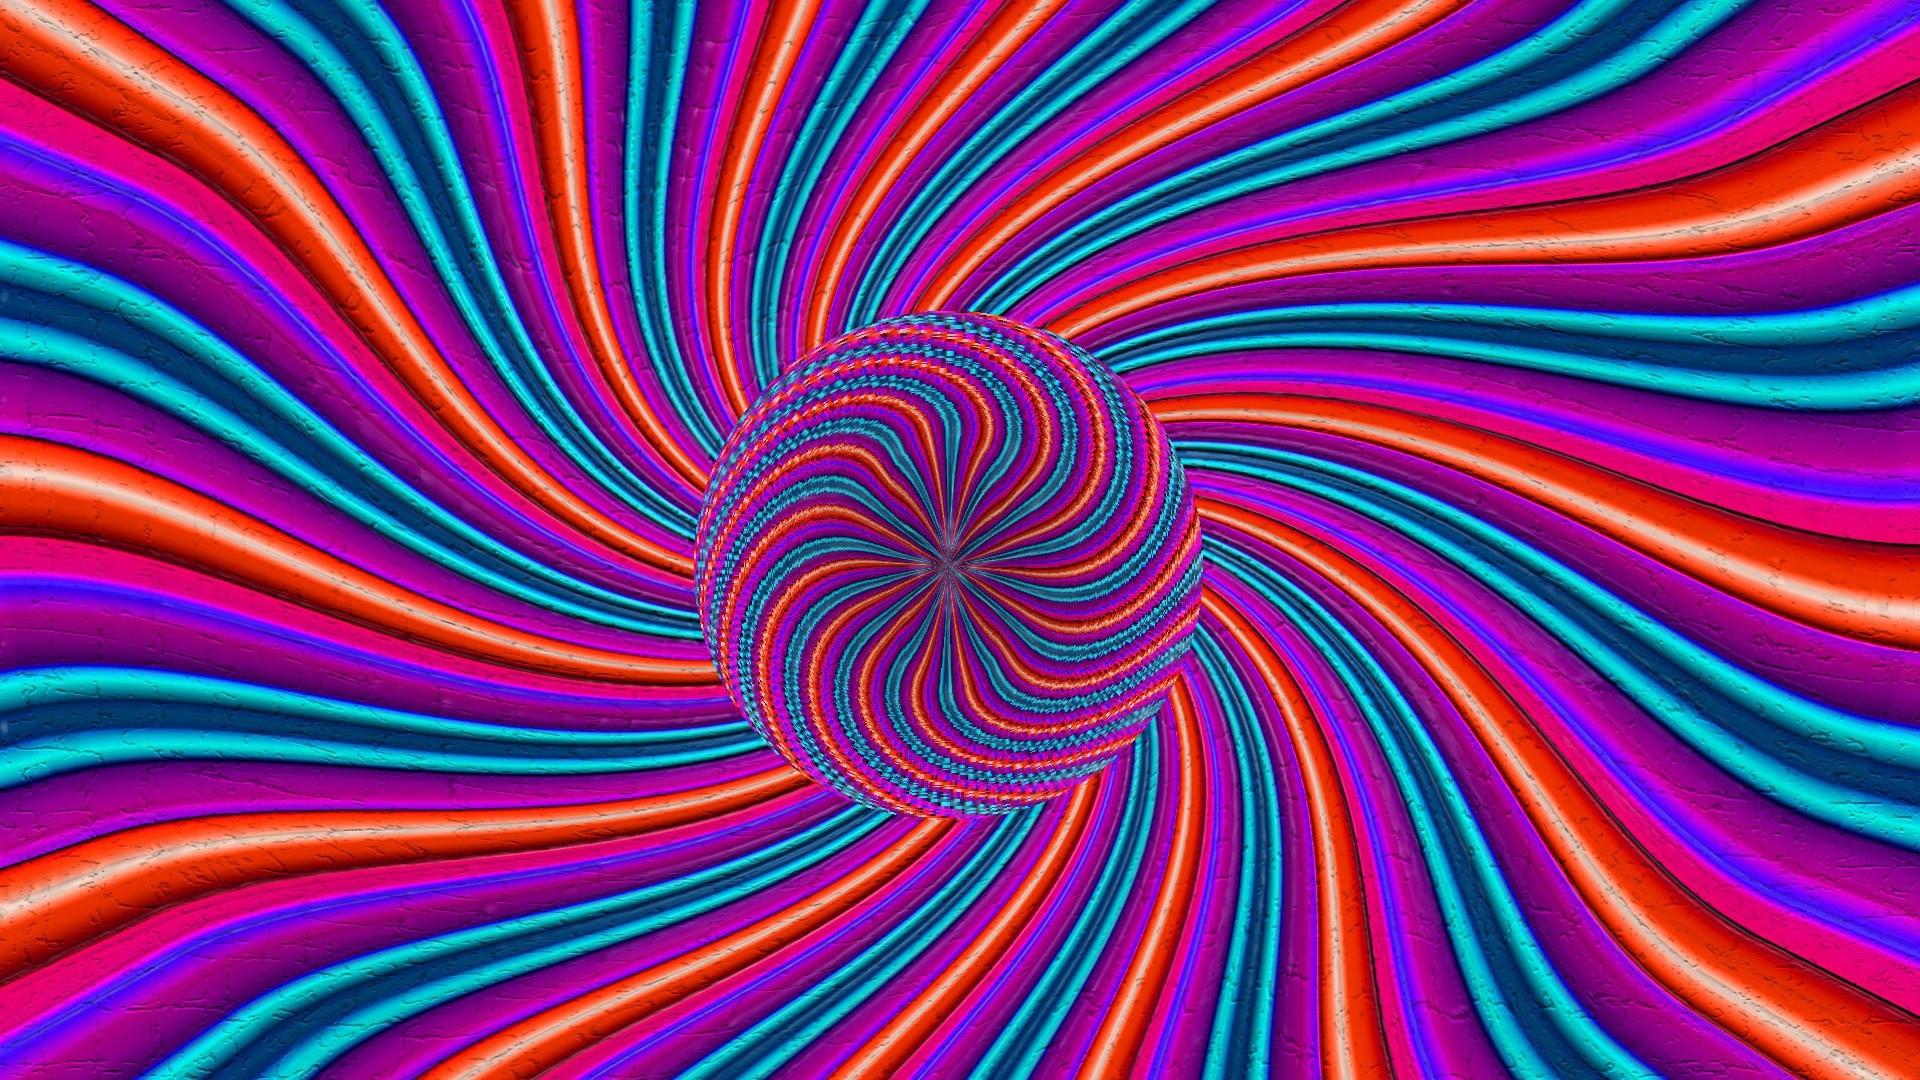 Moving Optical Illusion Wallpaper Amazing 3D Illusion Wallpaper